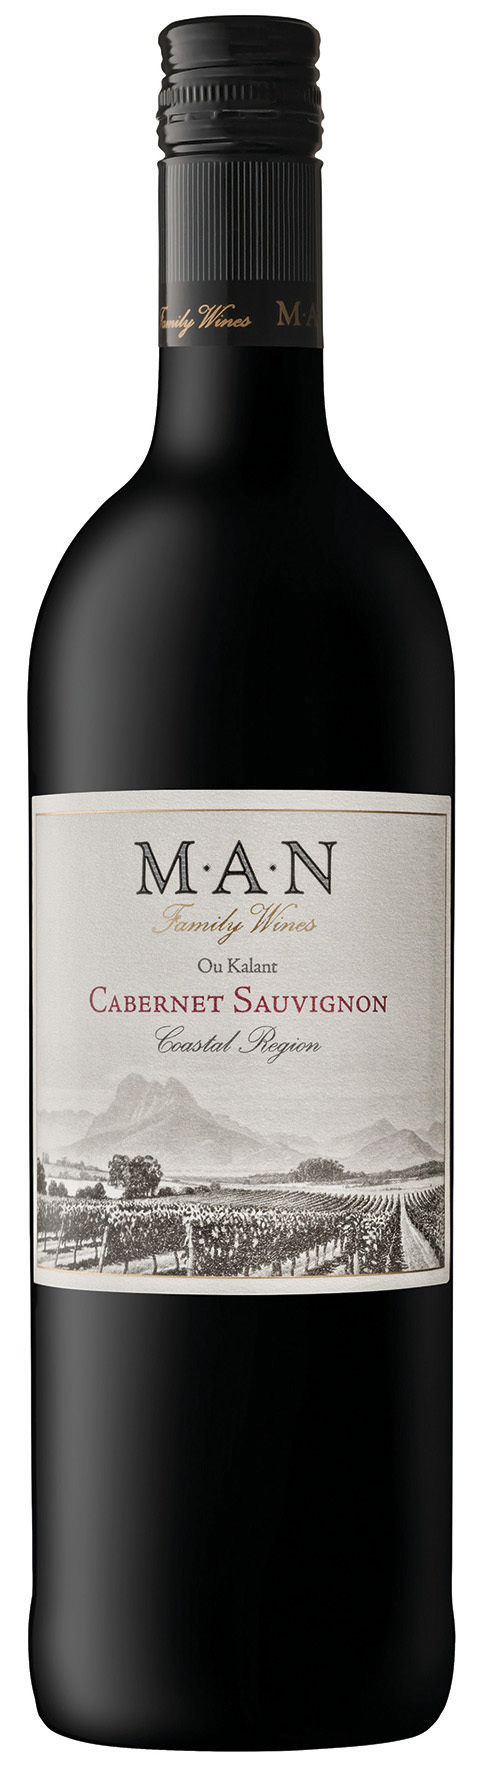 ou_kalant_cabernet_sauvignon _man_family_wines